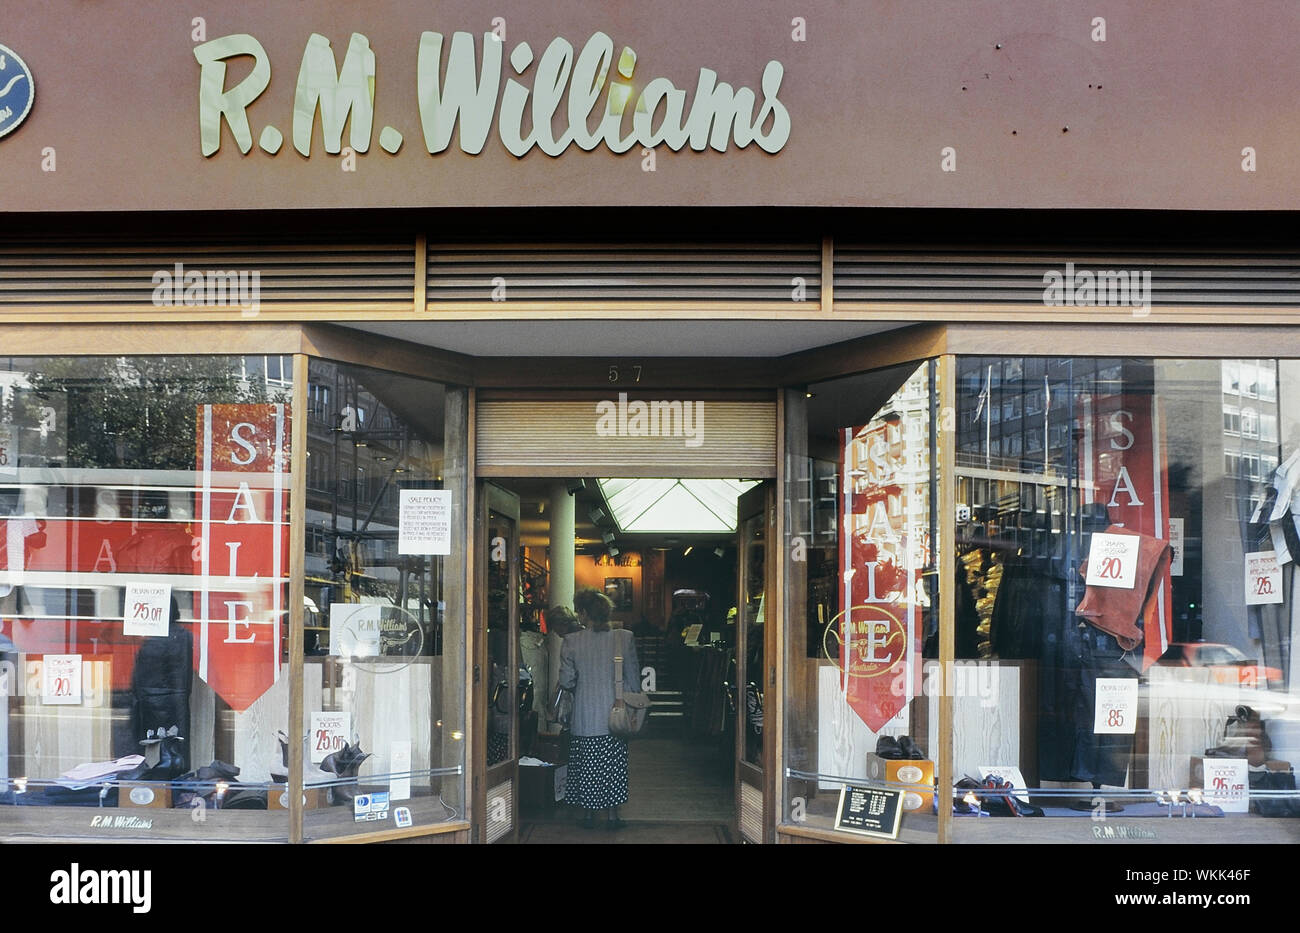 rm williams retailers